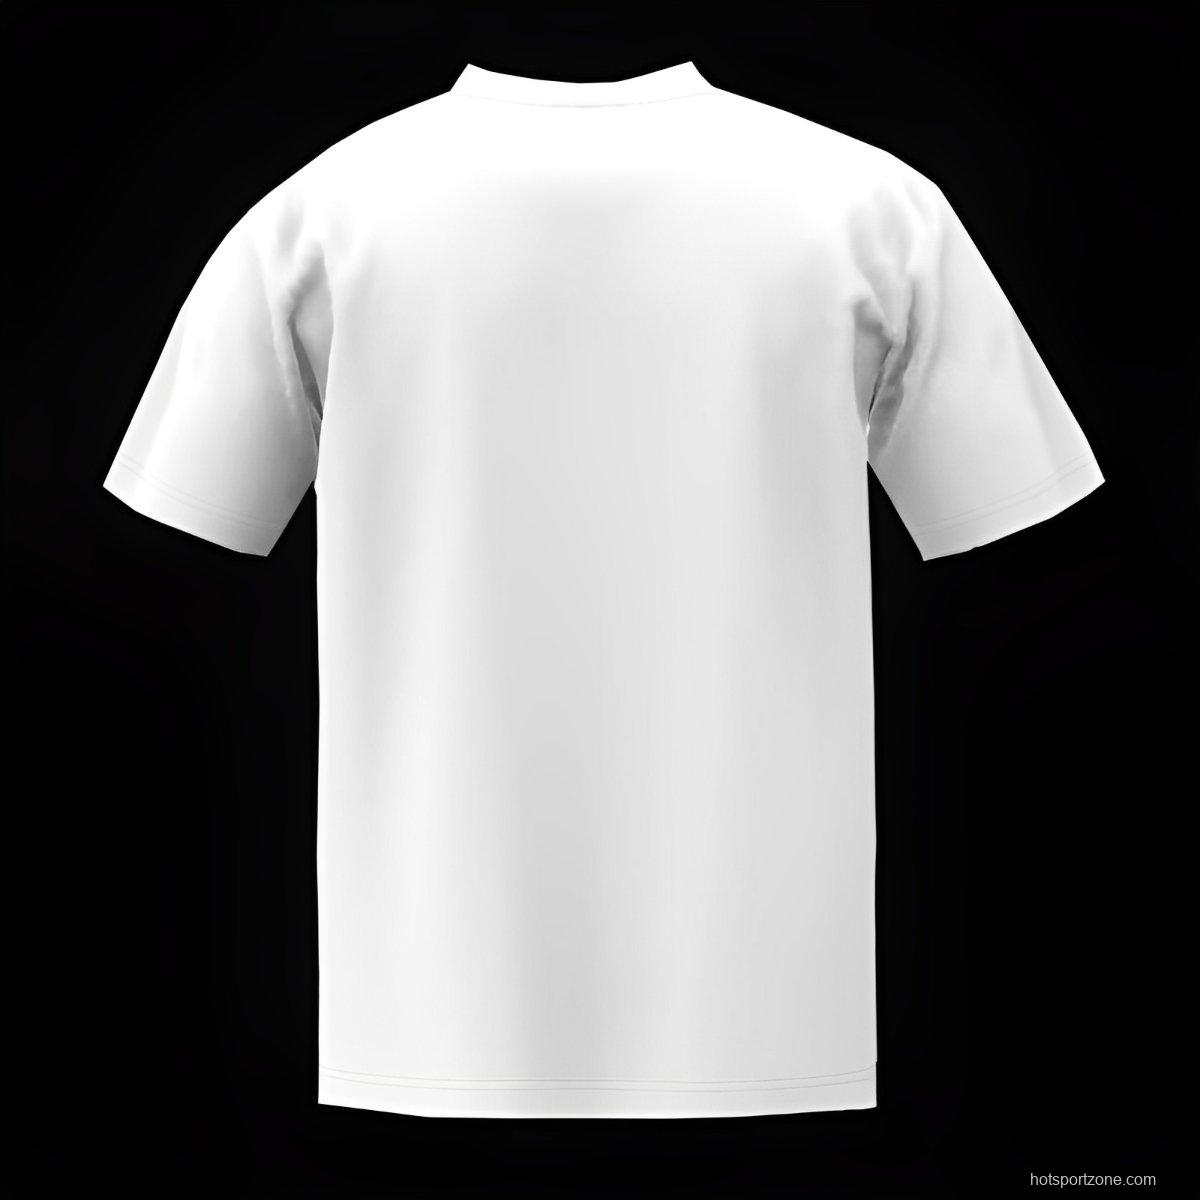 23/24 Inter Milan CAMPIONI D'ITALIA  White  T-Shirts